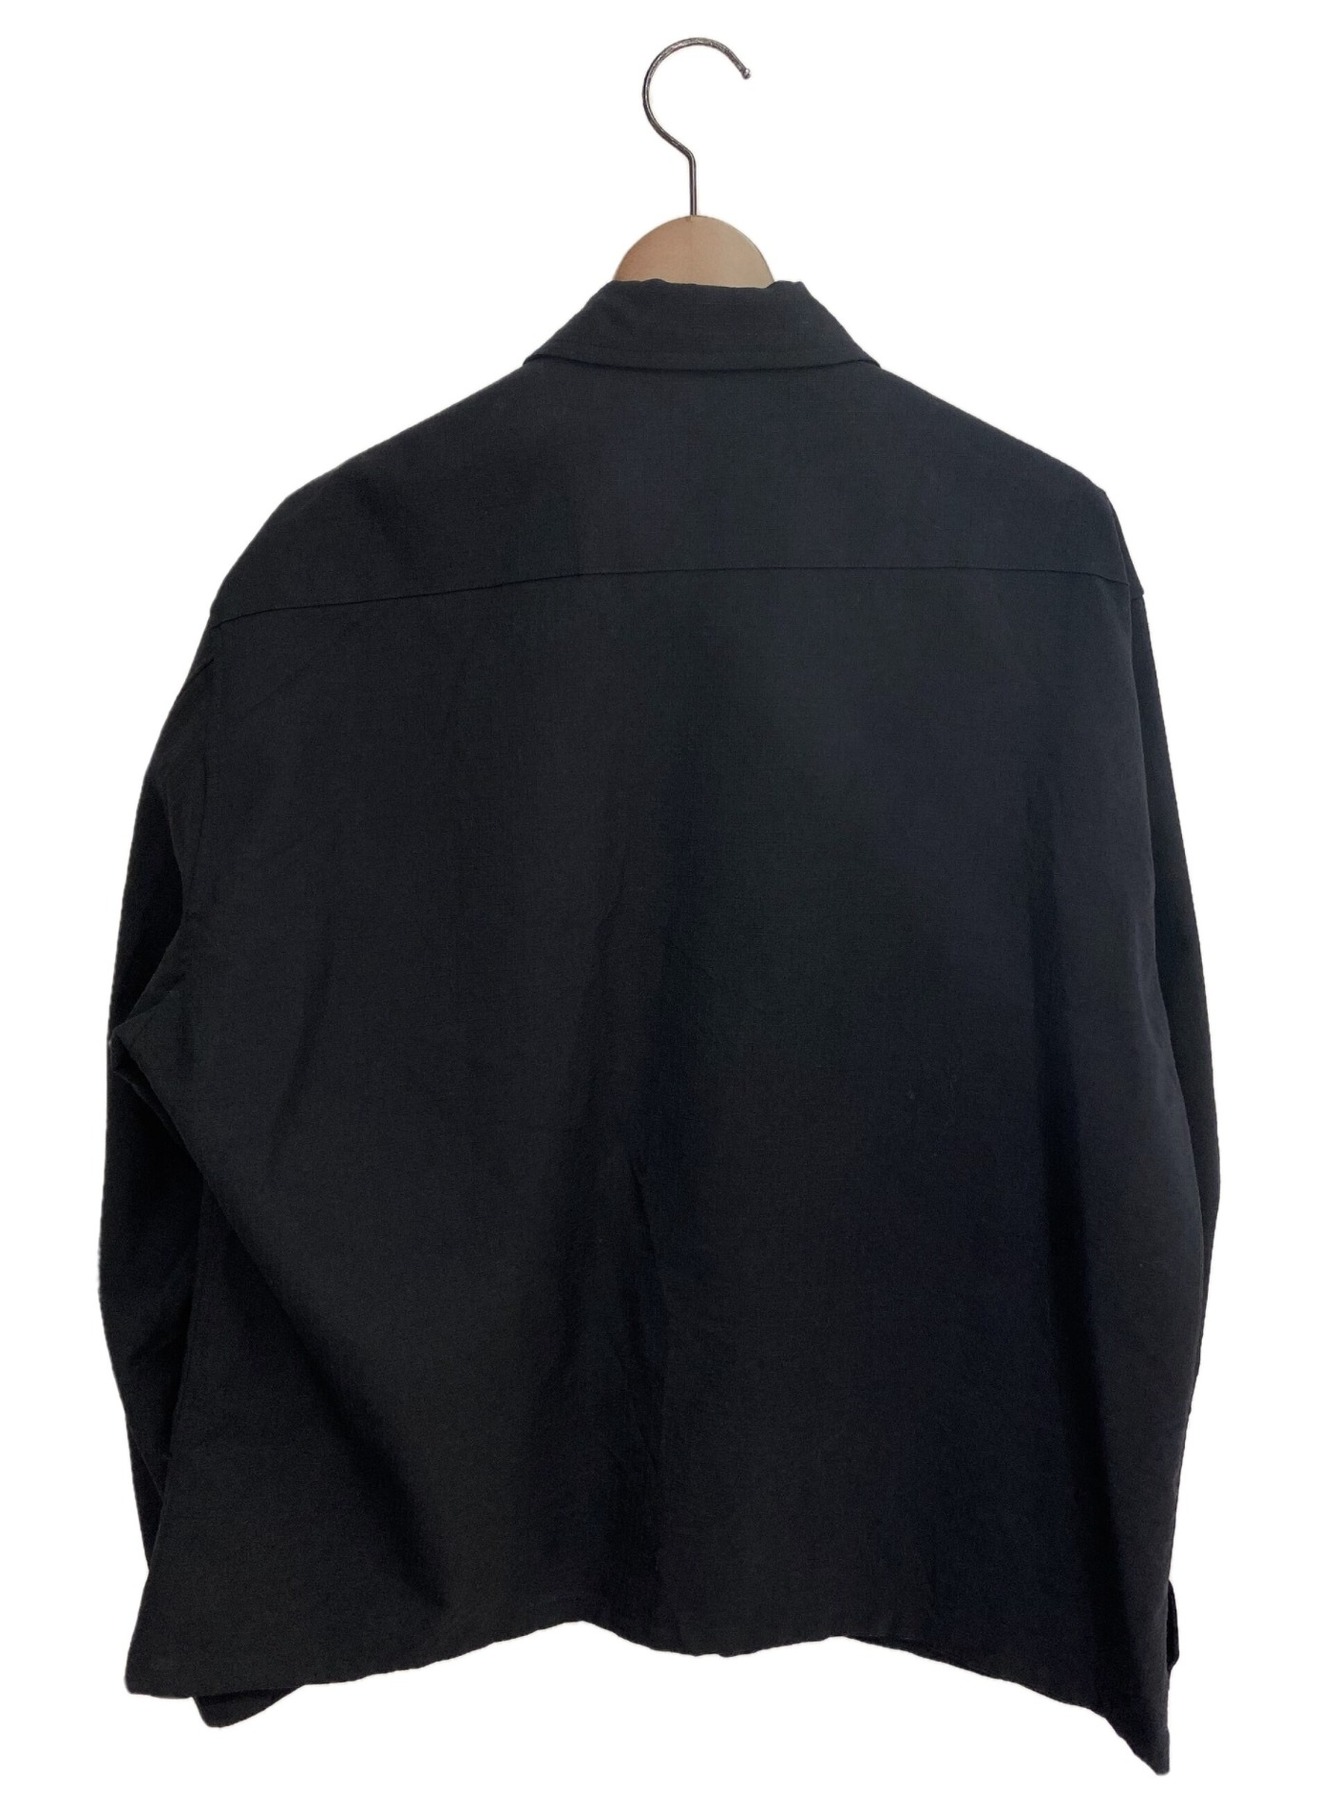 DAIRIKU (ダイリク) Wool Ripstop Fatigue Jacket ブラック サイズ:F